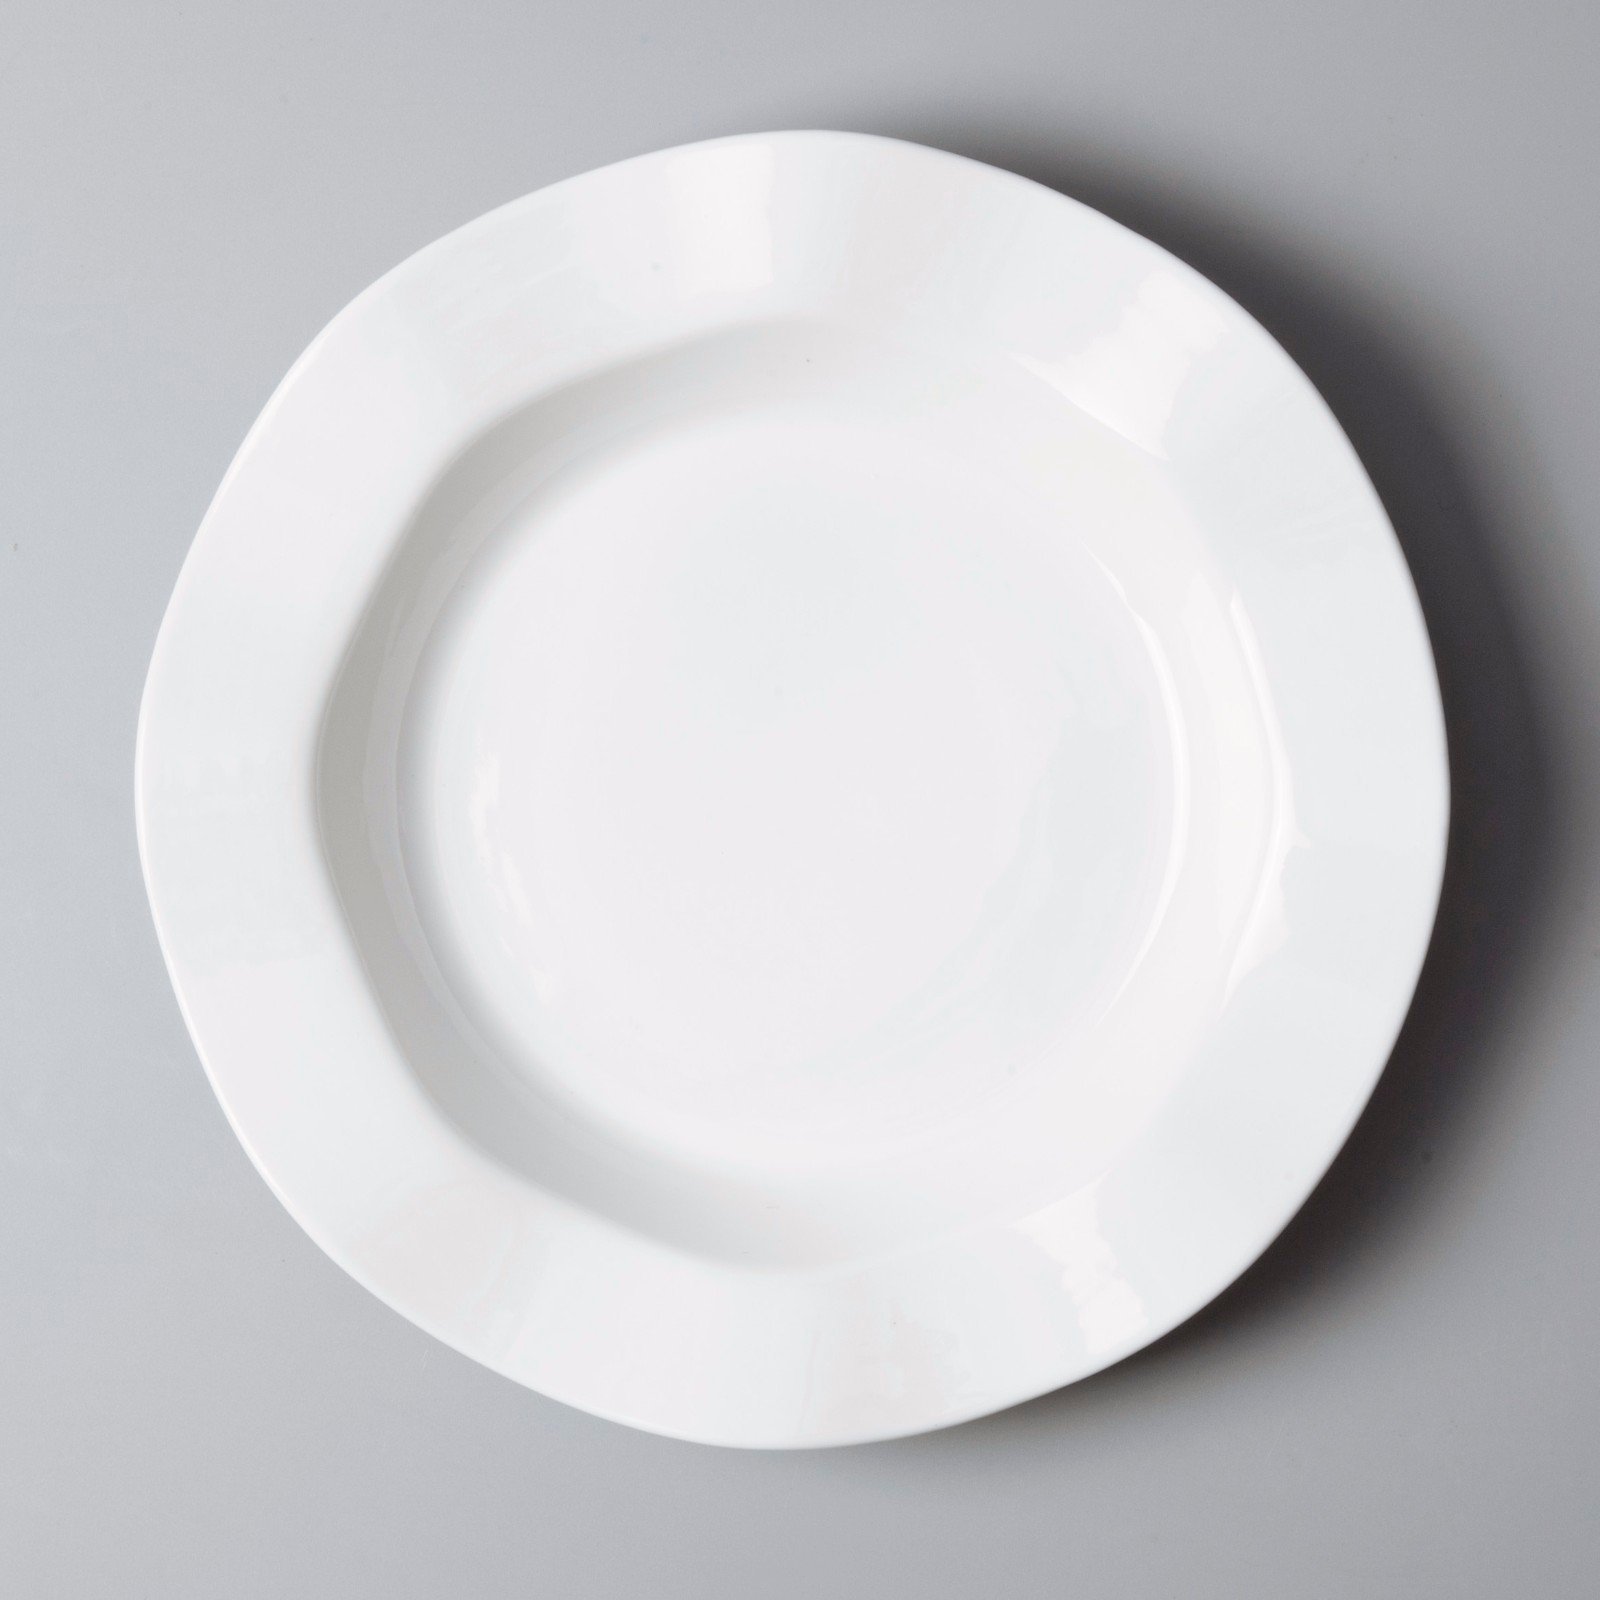 irregular restaurant dining ware stock series for home